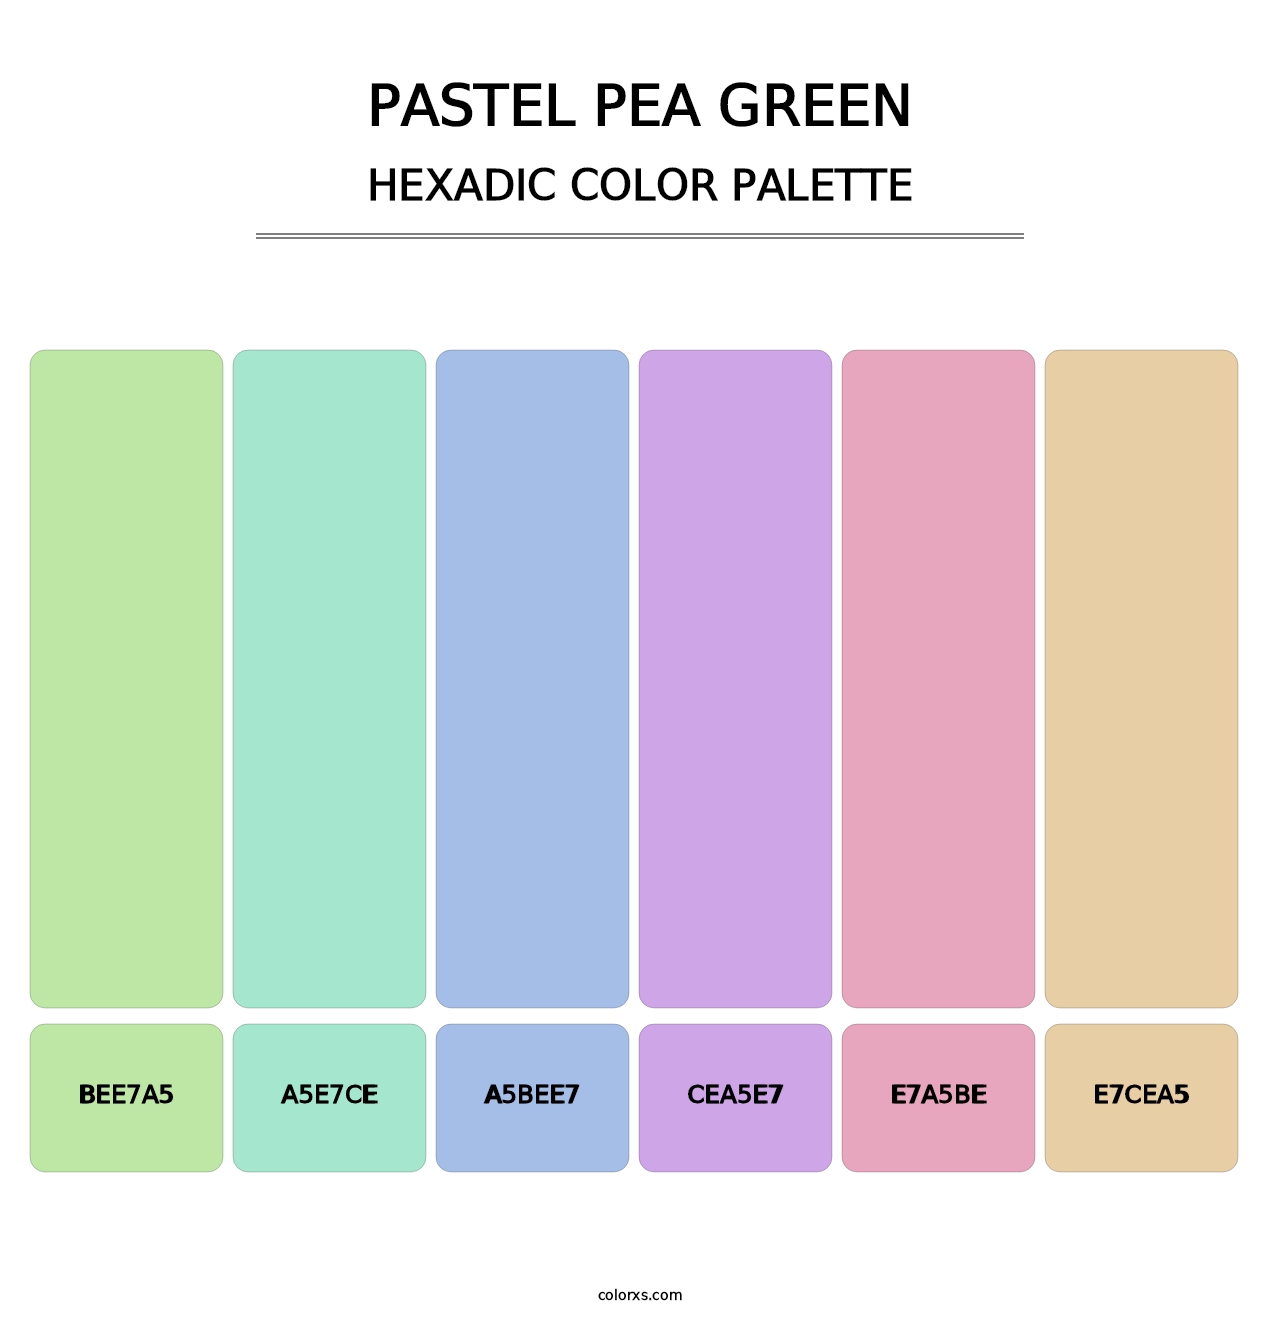 Pastel Pea Green - Hexadic Color Palette